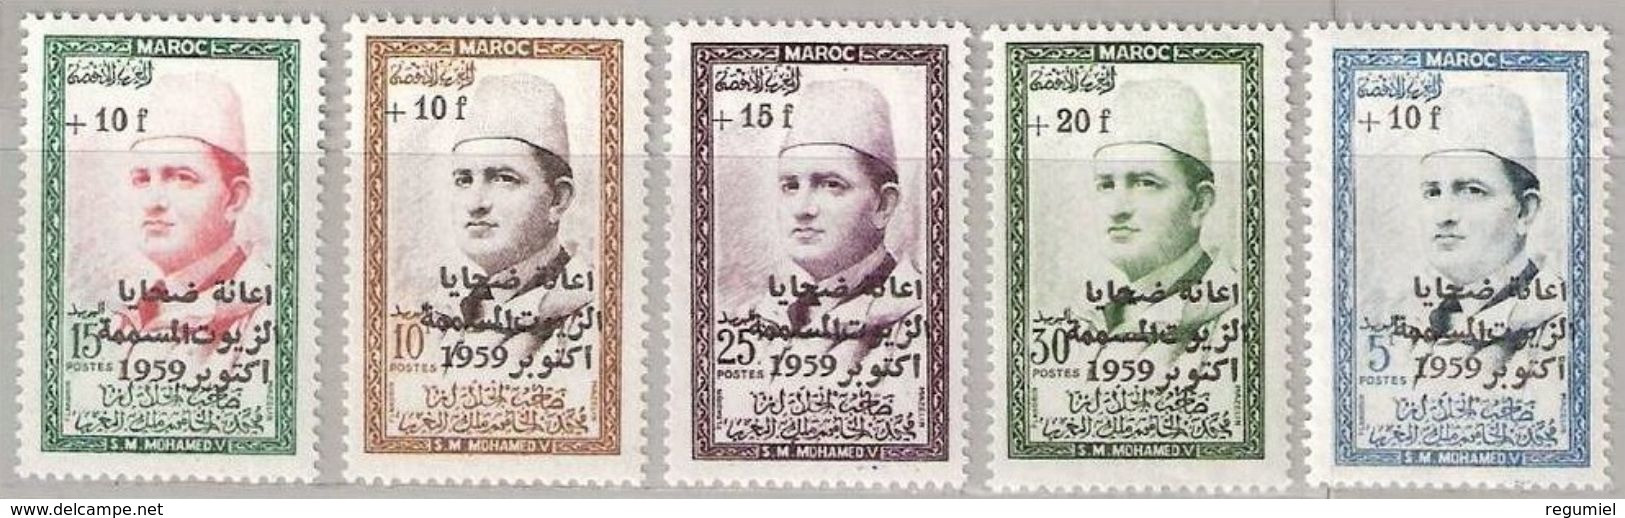 Maroc  397/401 ** MNH. 1960 - Morocco (1956-...)